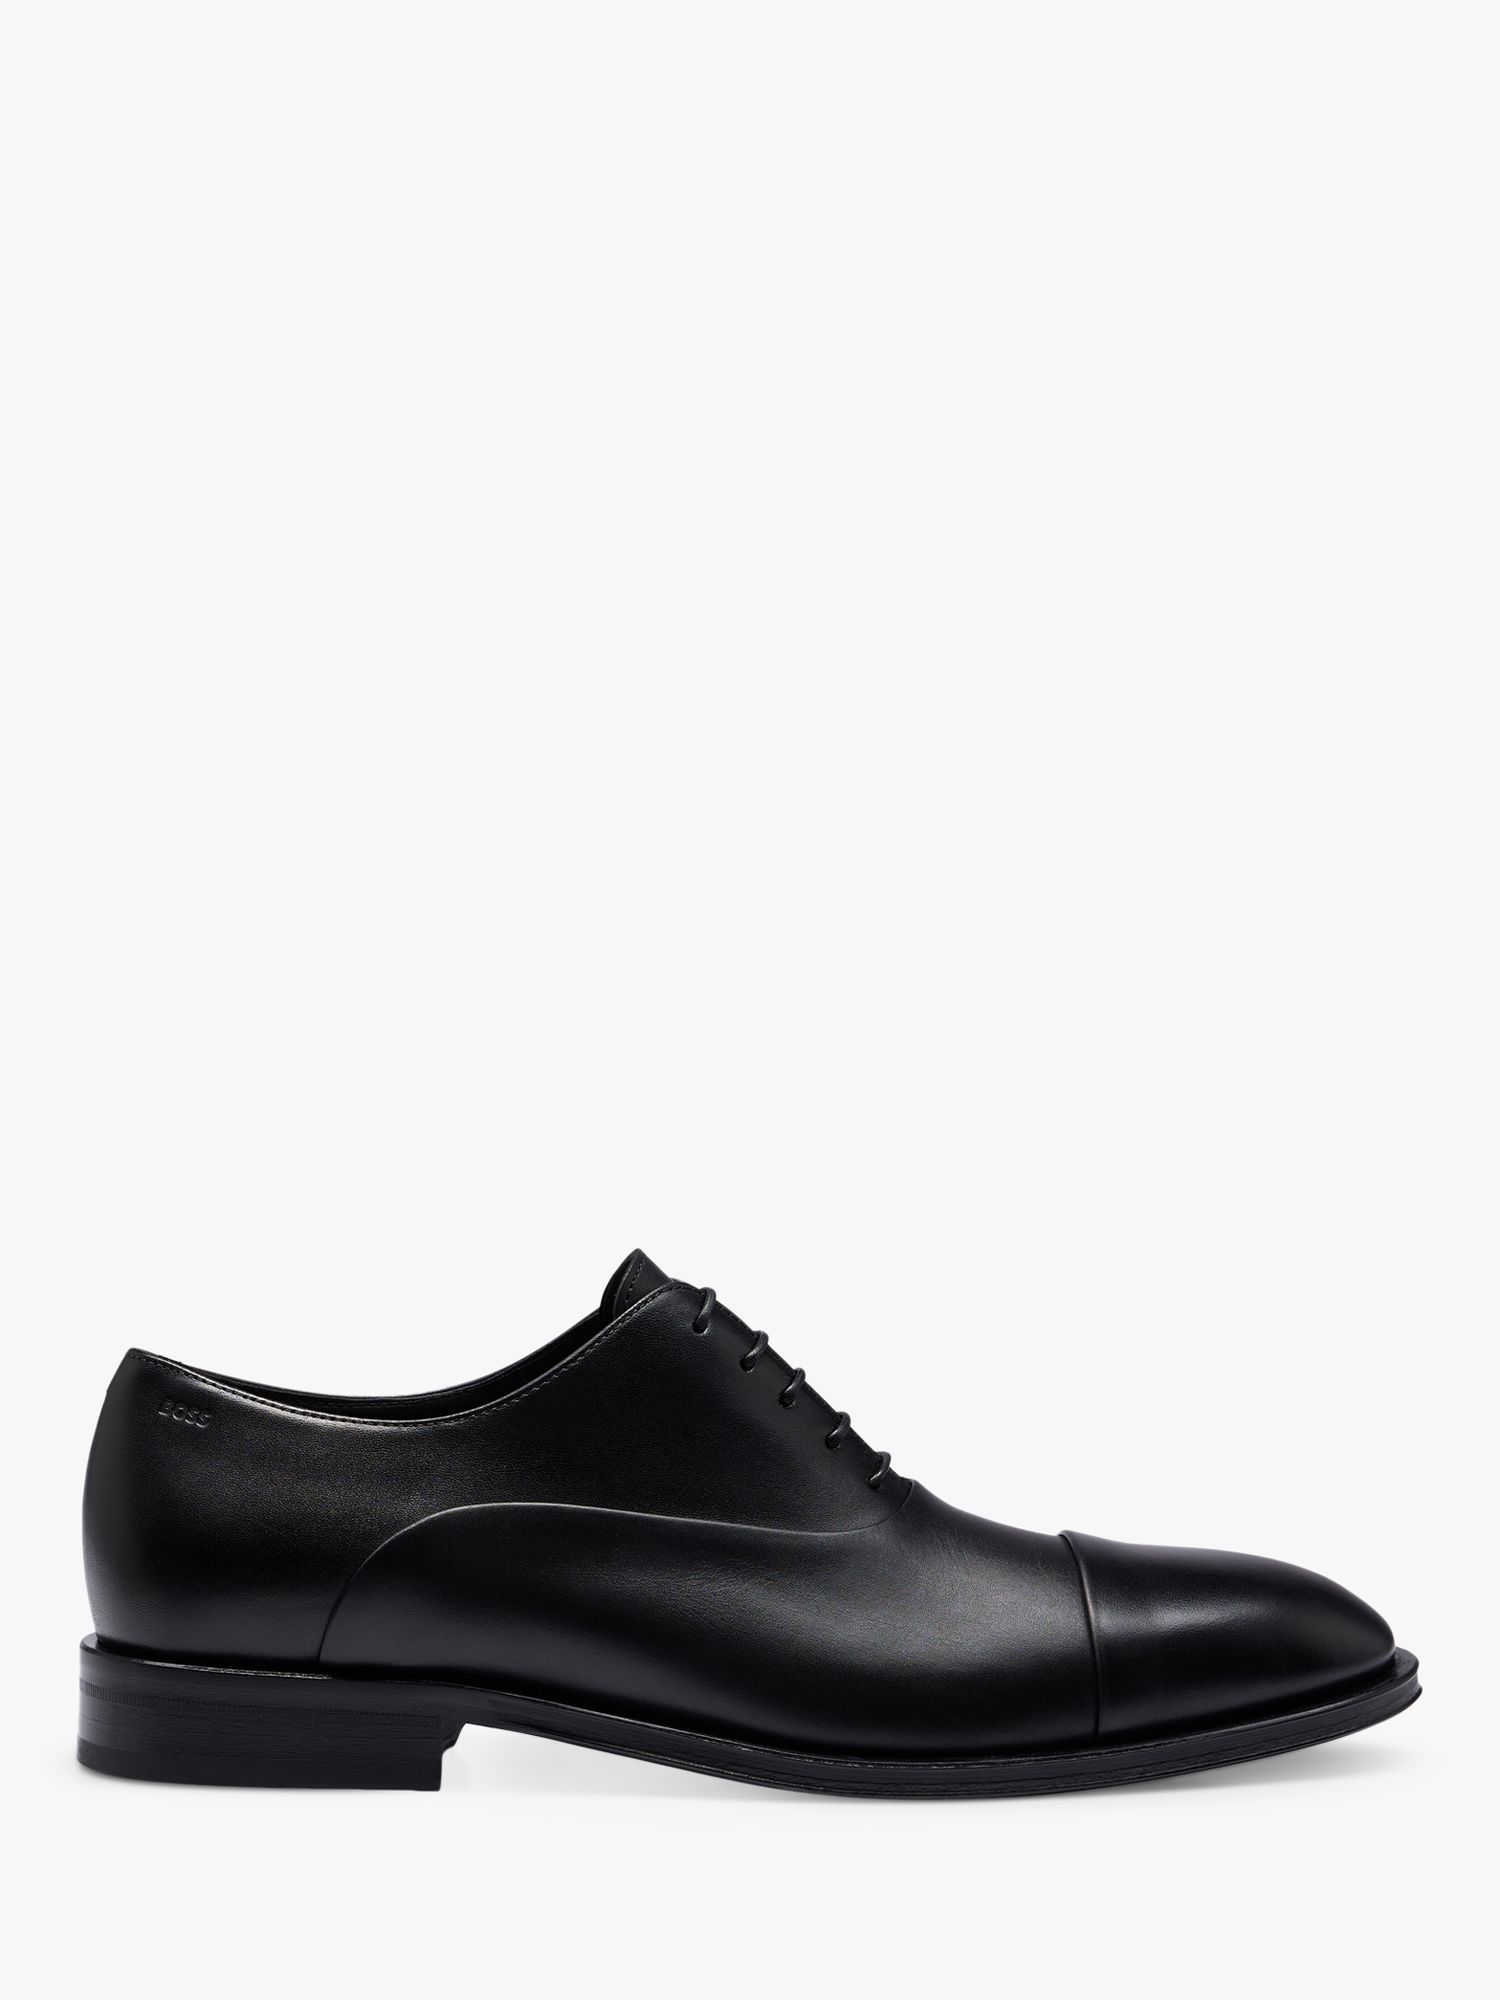 HUGO BOSS Derrek Oxford Dress Shoes, Black at John Lewis & Partners